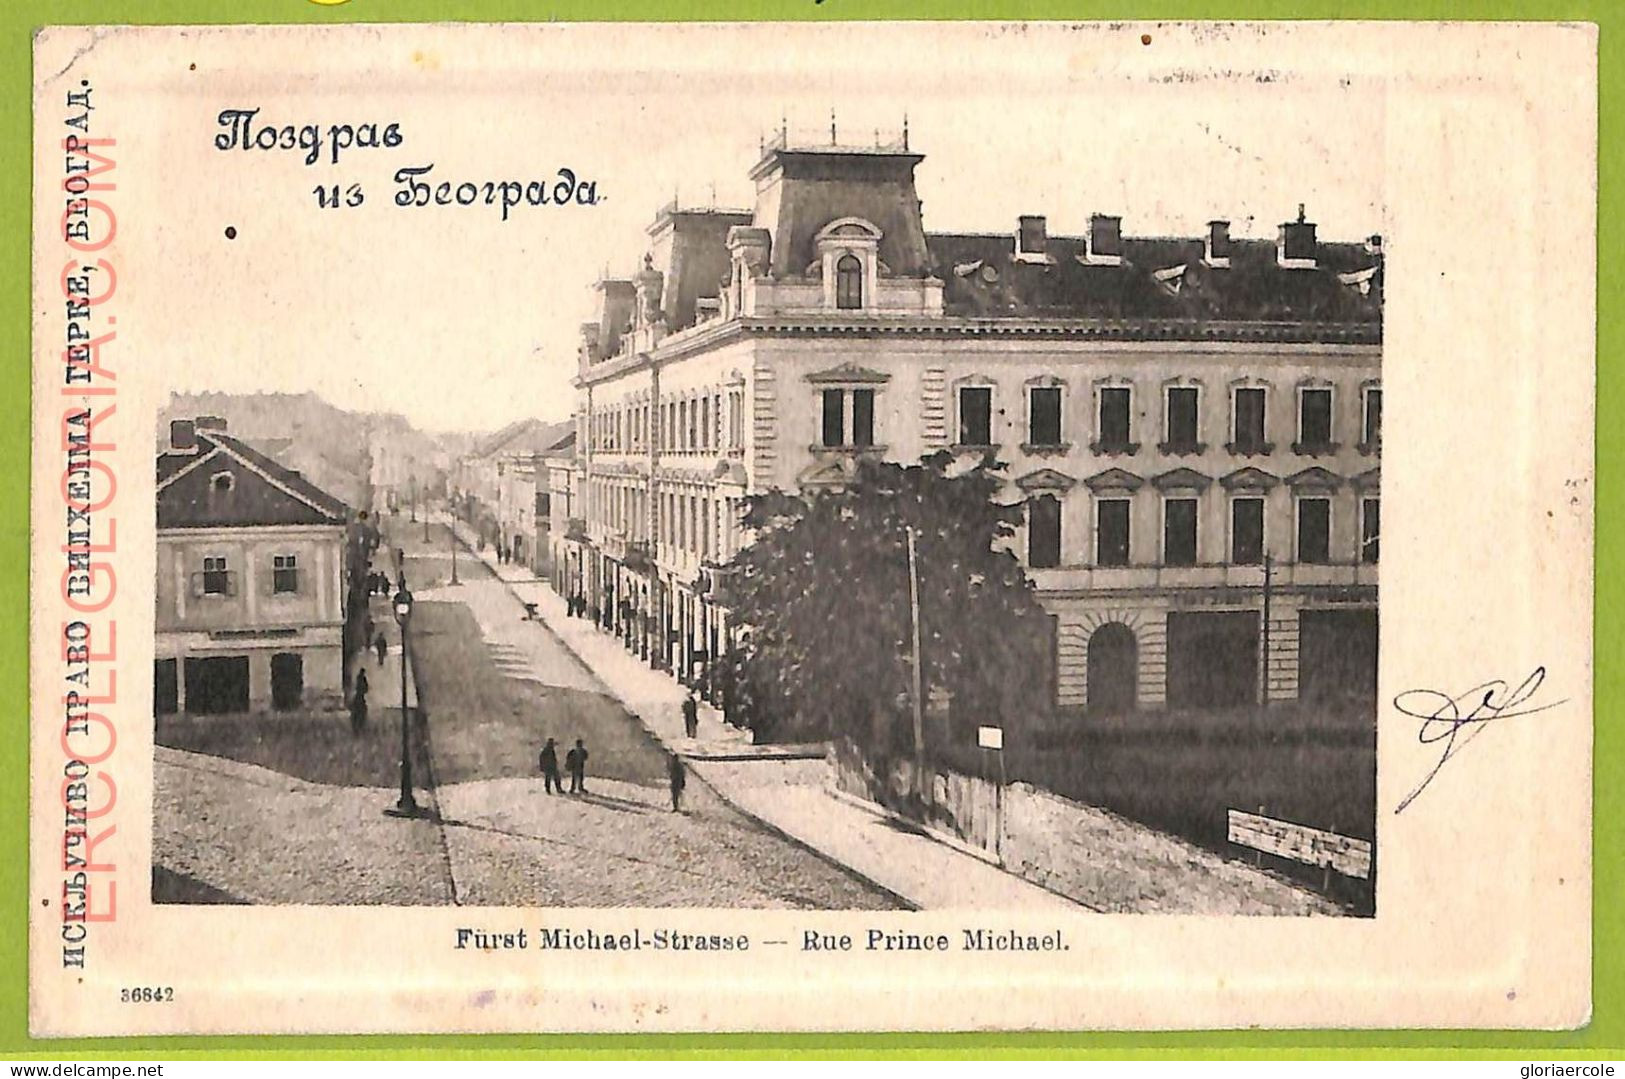 Ae8950 - Ansichtskarten VINTAGE POSTCARD - SERBIA - Belgrade Бео́град - Serbie